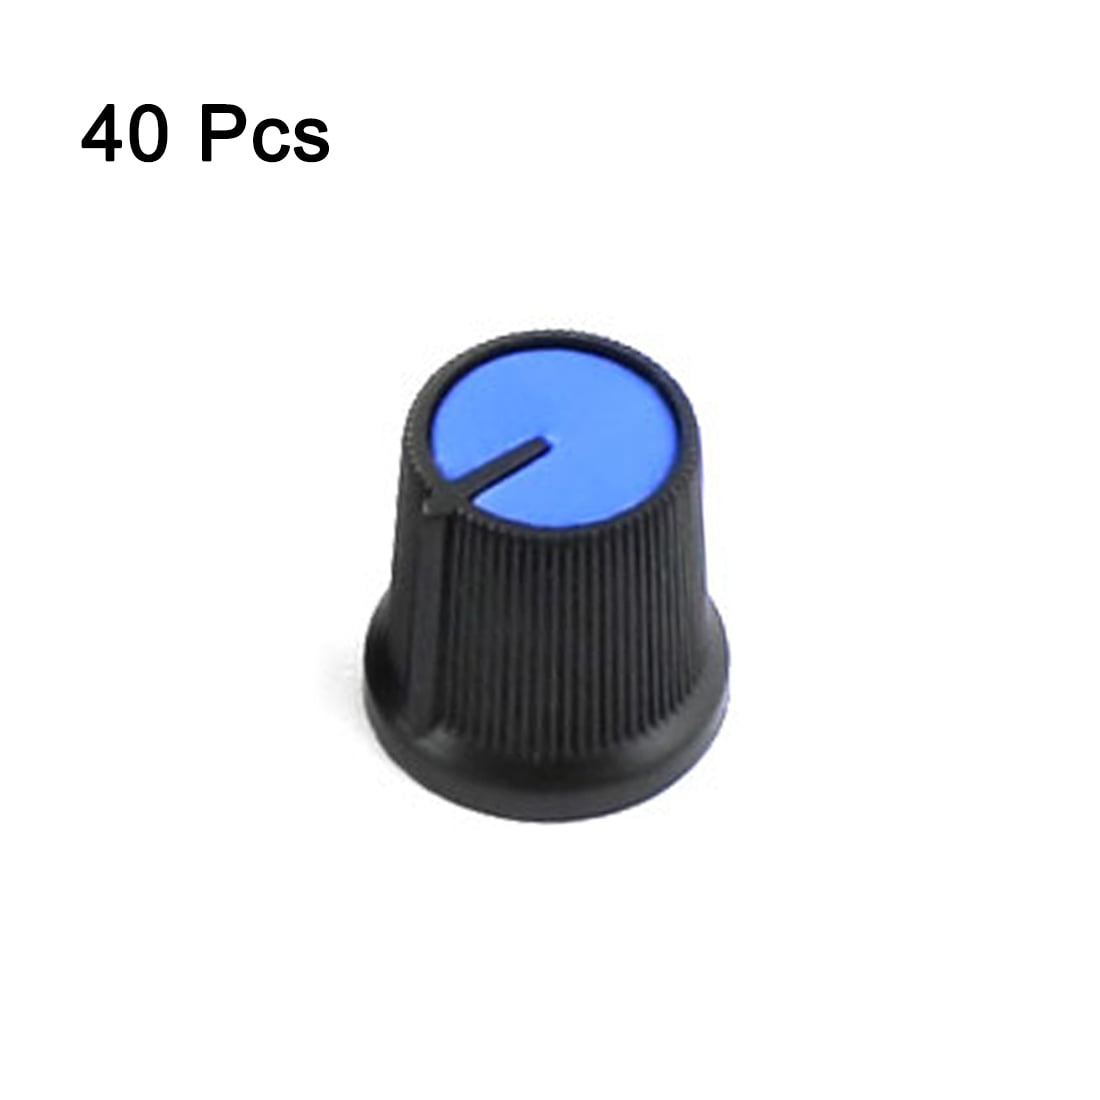 40pcs 6mm Knurled Shaft Blue Top Taper Volume Knob Cap for Potentiometer Pot 702105701133 